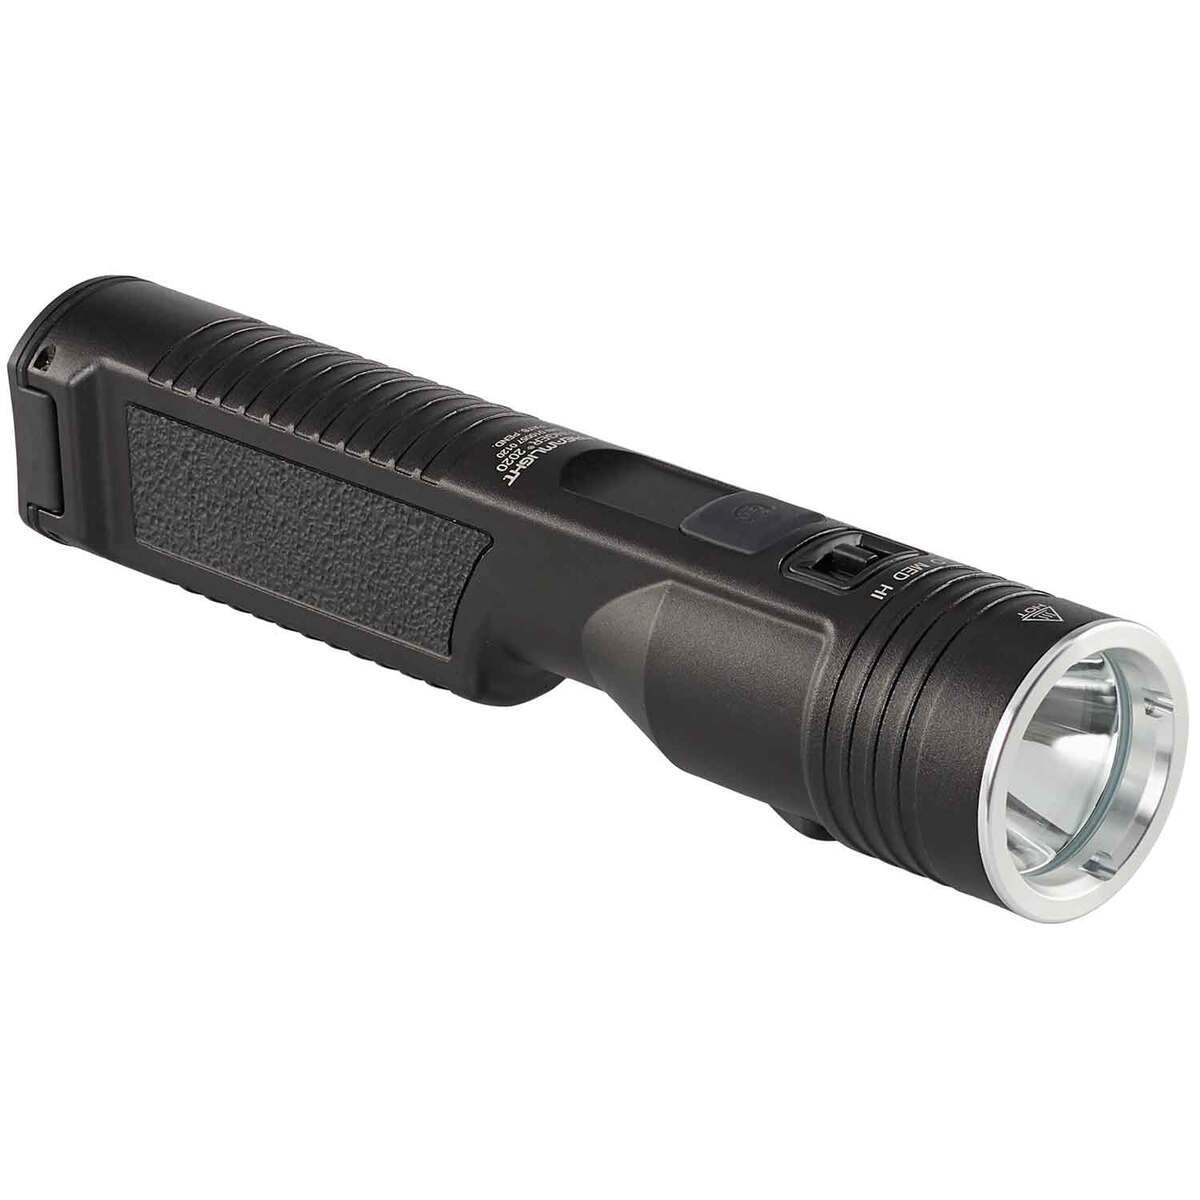 https://www.sportsmans.com/medias/streamlight-stinger-2020-rechargeable-flashlight-1741649-1.jpg?context=bWFzdGVyfGltYWdlc3w1NTA1NHxpbWFnZS9qcGVnfGhhOC9oMmEvMTA1MDQwMjM2MzgwNDYvMTc0MTY0OS0xX2Jhc2UtY29udmVyc2lvbkZvcm1hdF8xMjAwLWNvbnZlcnNpb25Gb3JtYXR8Y2JiYmRkMmFhZGQyNTY2MTk2NjFkZjM5NWEzYWMyNjc3Yjk4MWJkMWNkODM4M2Q4ODgxNDY0NzYzMDFiMDA4Mg